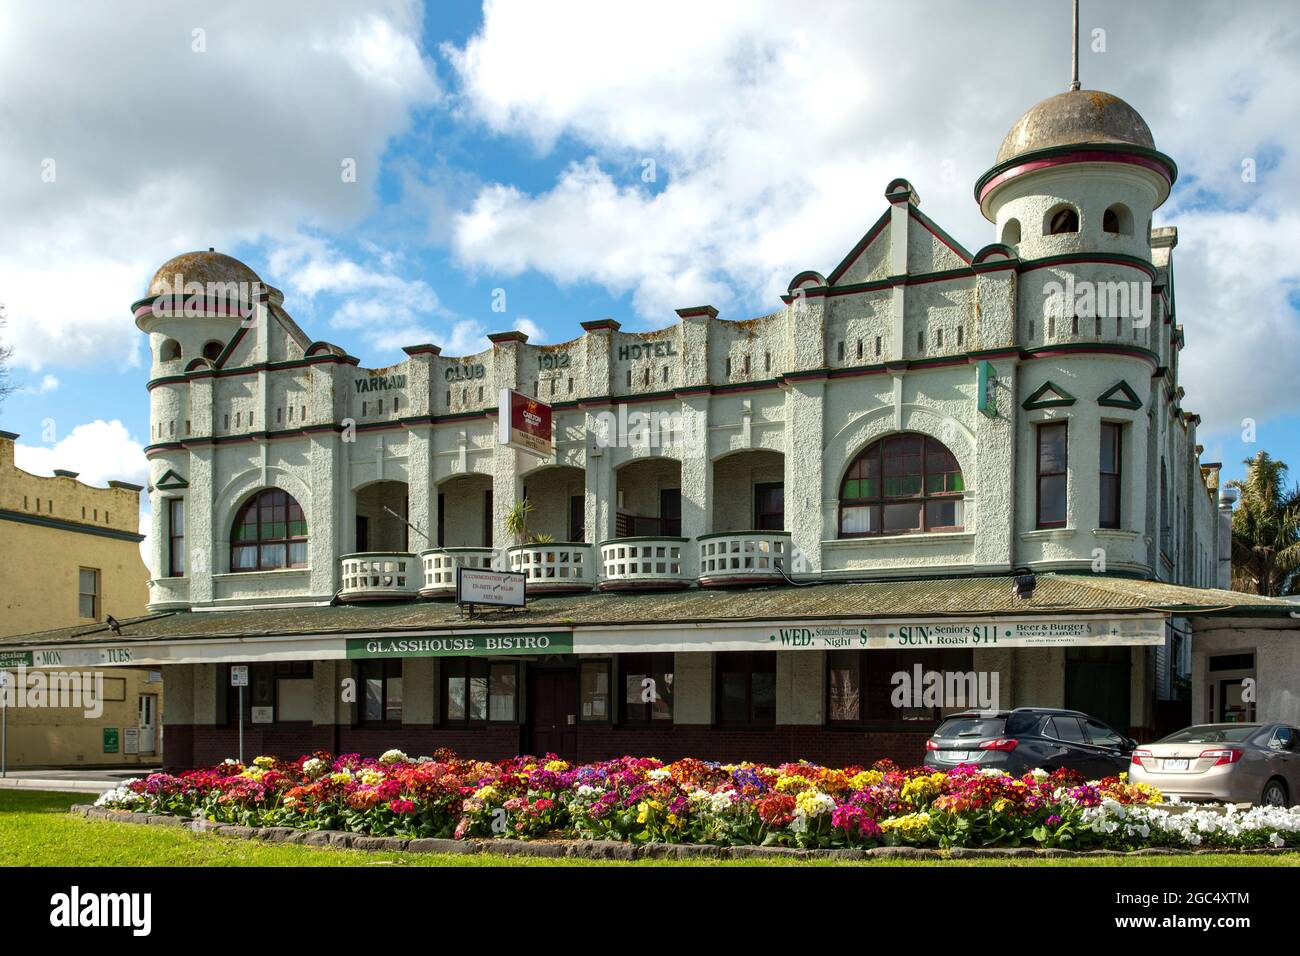 The Old Yarram Club Hotel, Yarram, Victoria, Australia Stock Photo